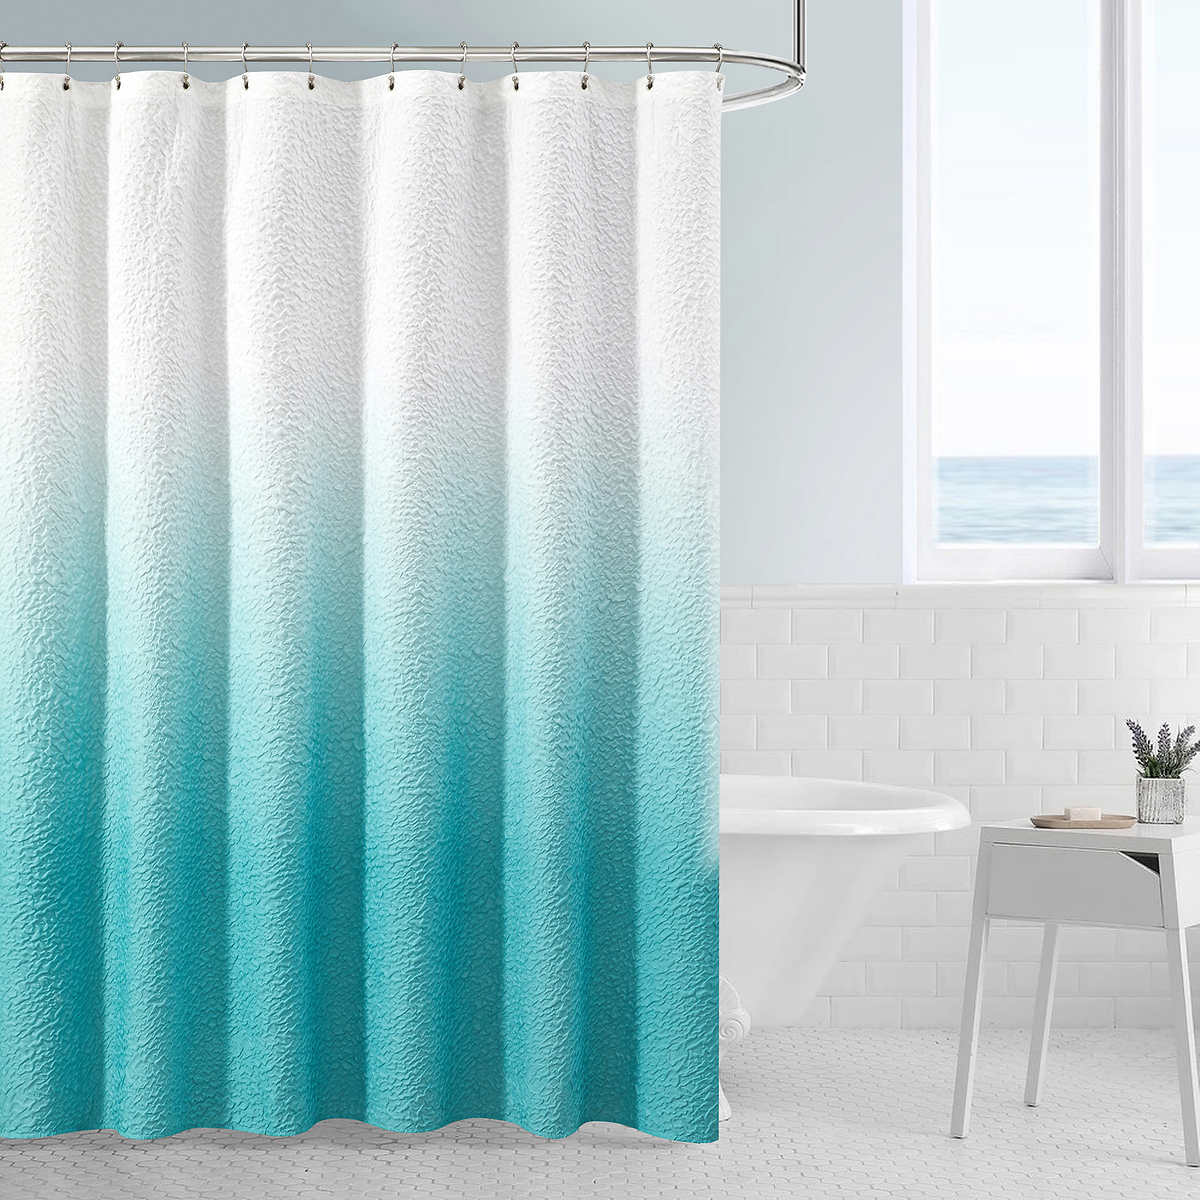 Colorful Alphabet Shower Curtain Bath Mat Toilet Cover Rug Bathroom Decor Set 